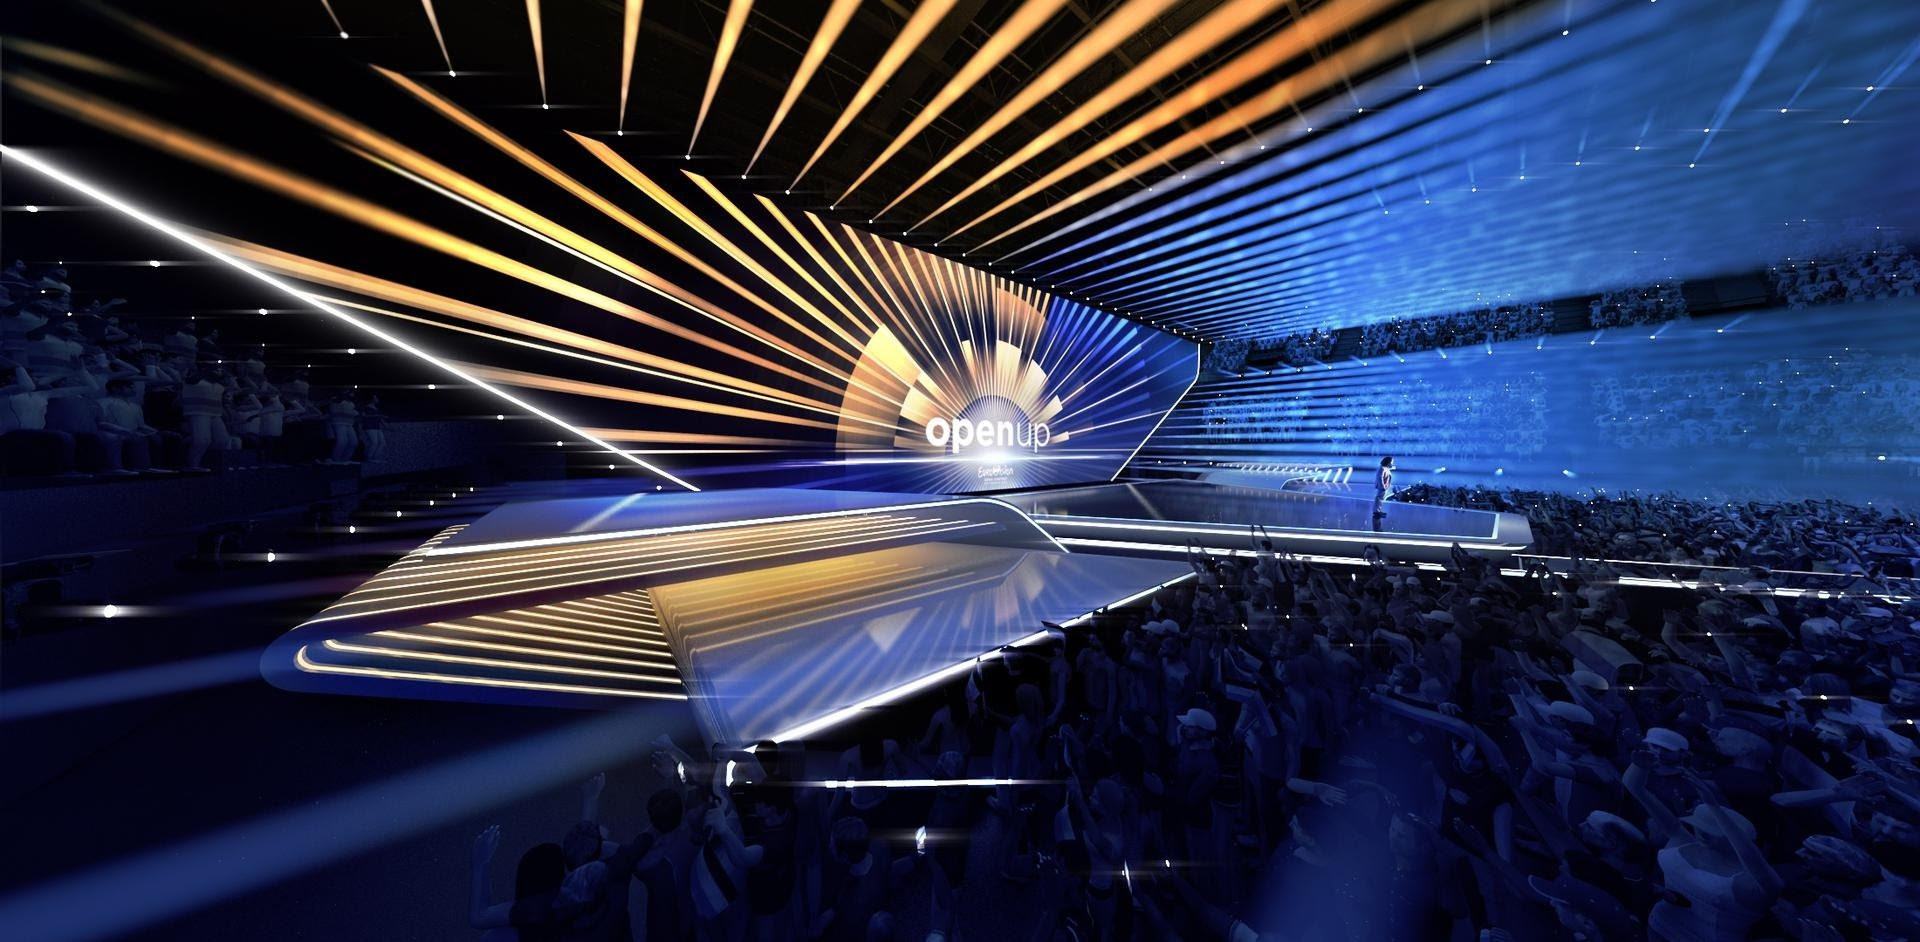 Eurovision 2020 stage design revealed!